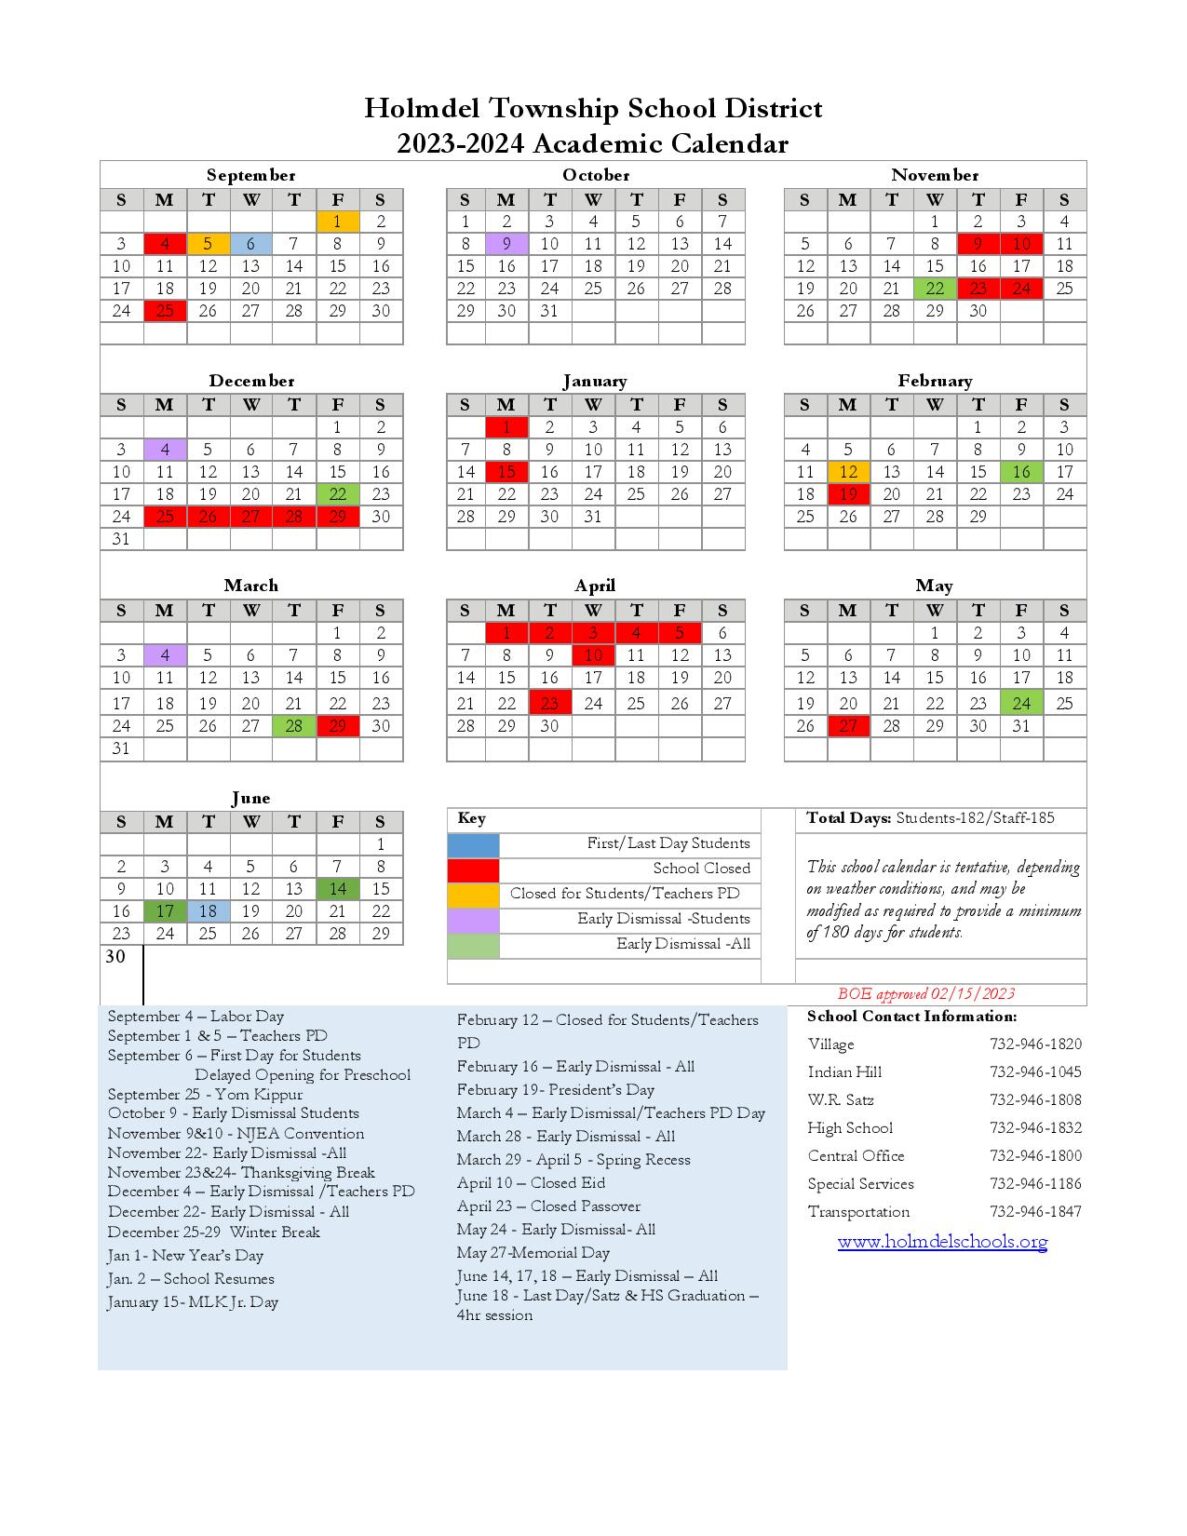 holmdel-township-schools-calendar-2023-2024-academic-year-school-calendar-info